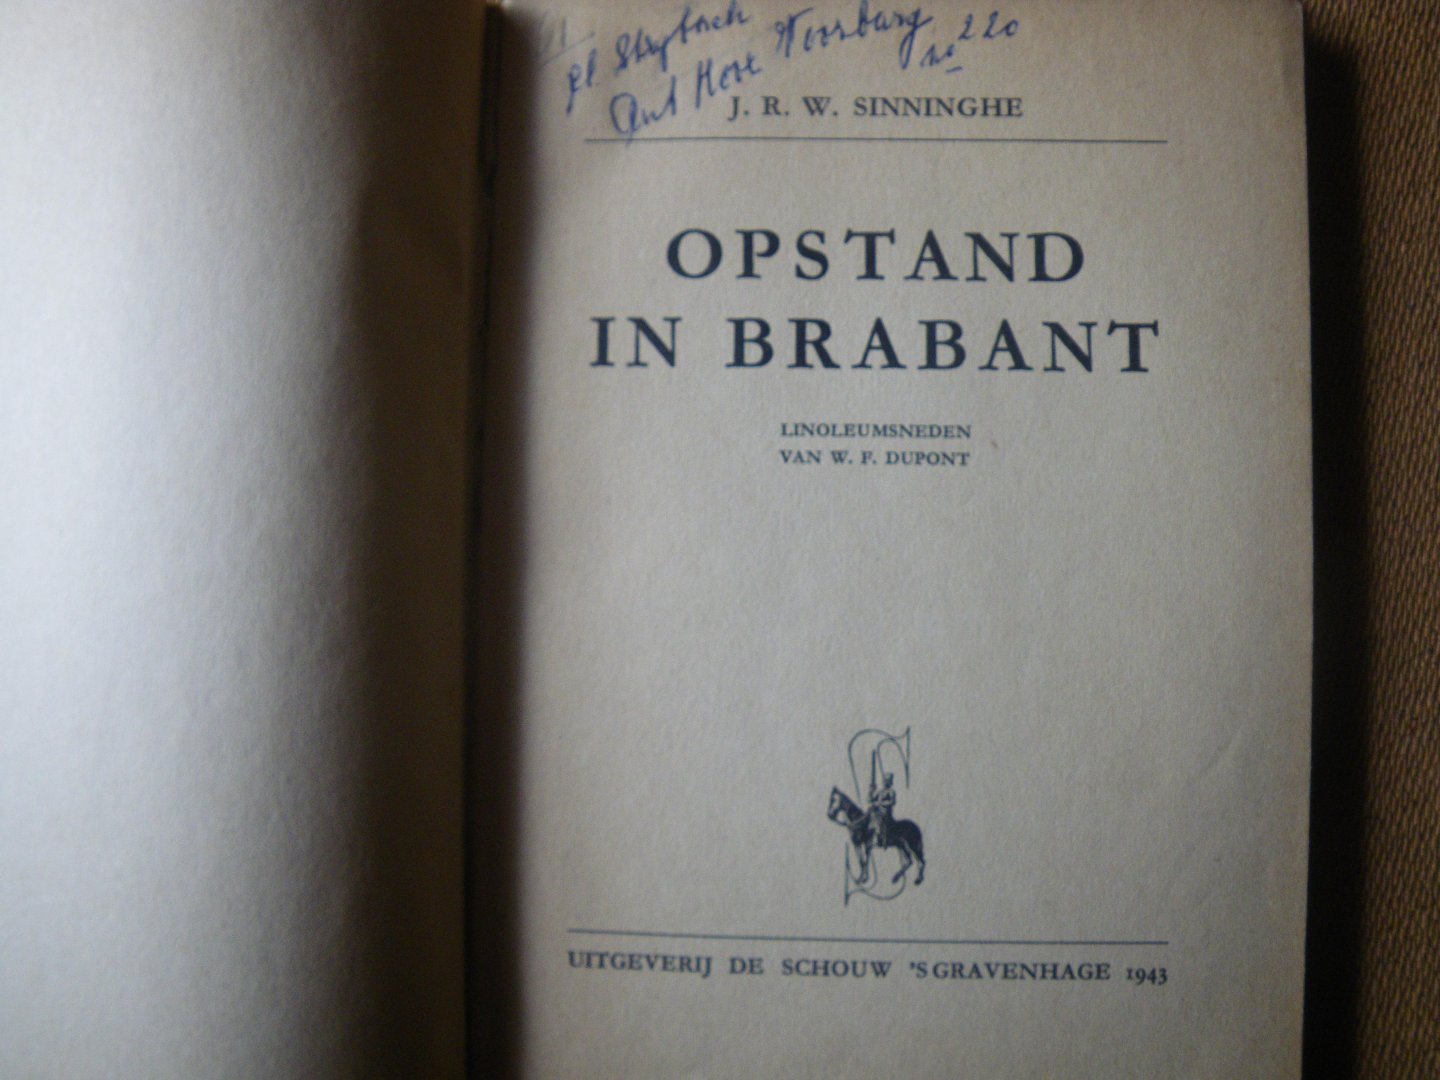 Sinninghe, J.R.W. - Opstand in Brabant. Linoleumsnede's van W.F. Dupont